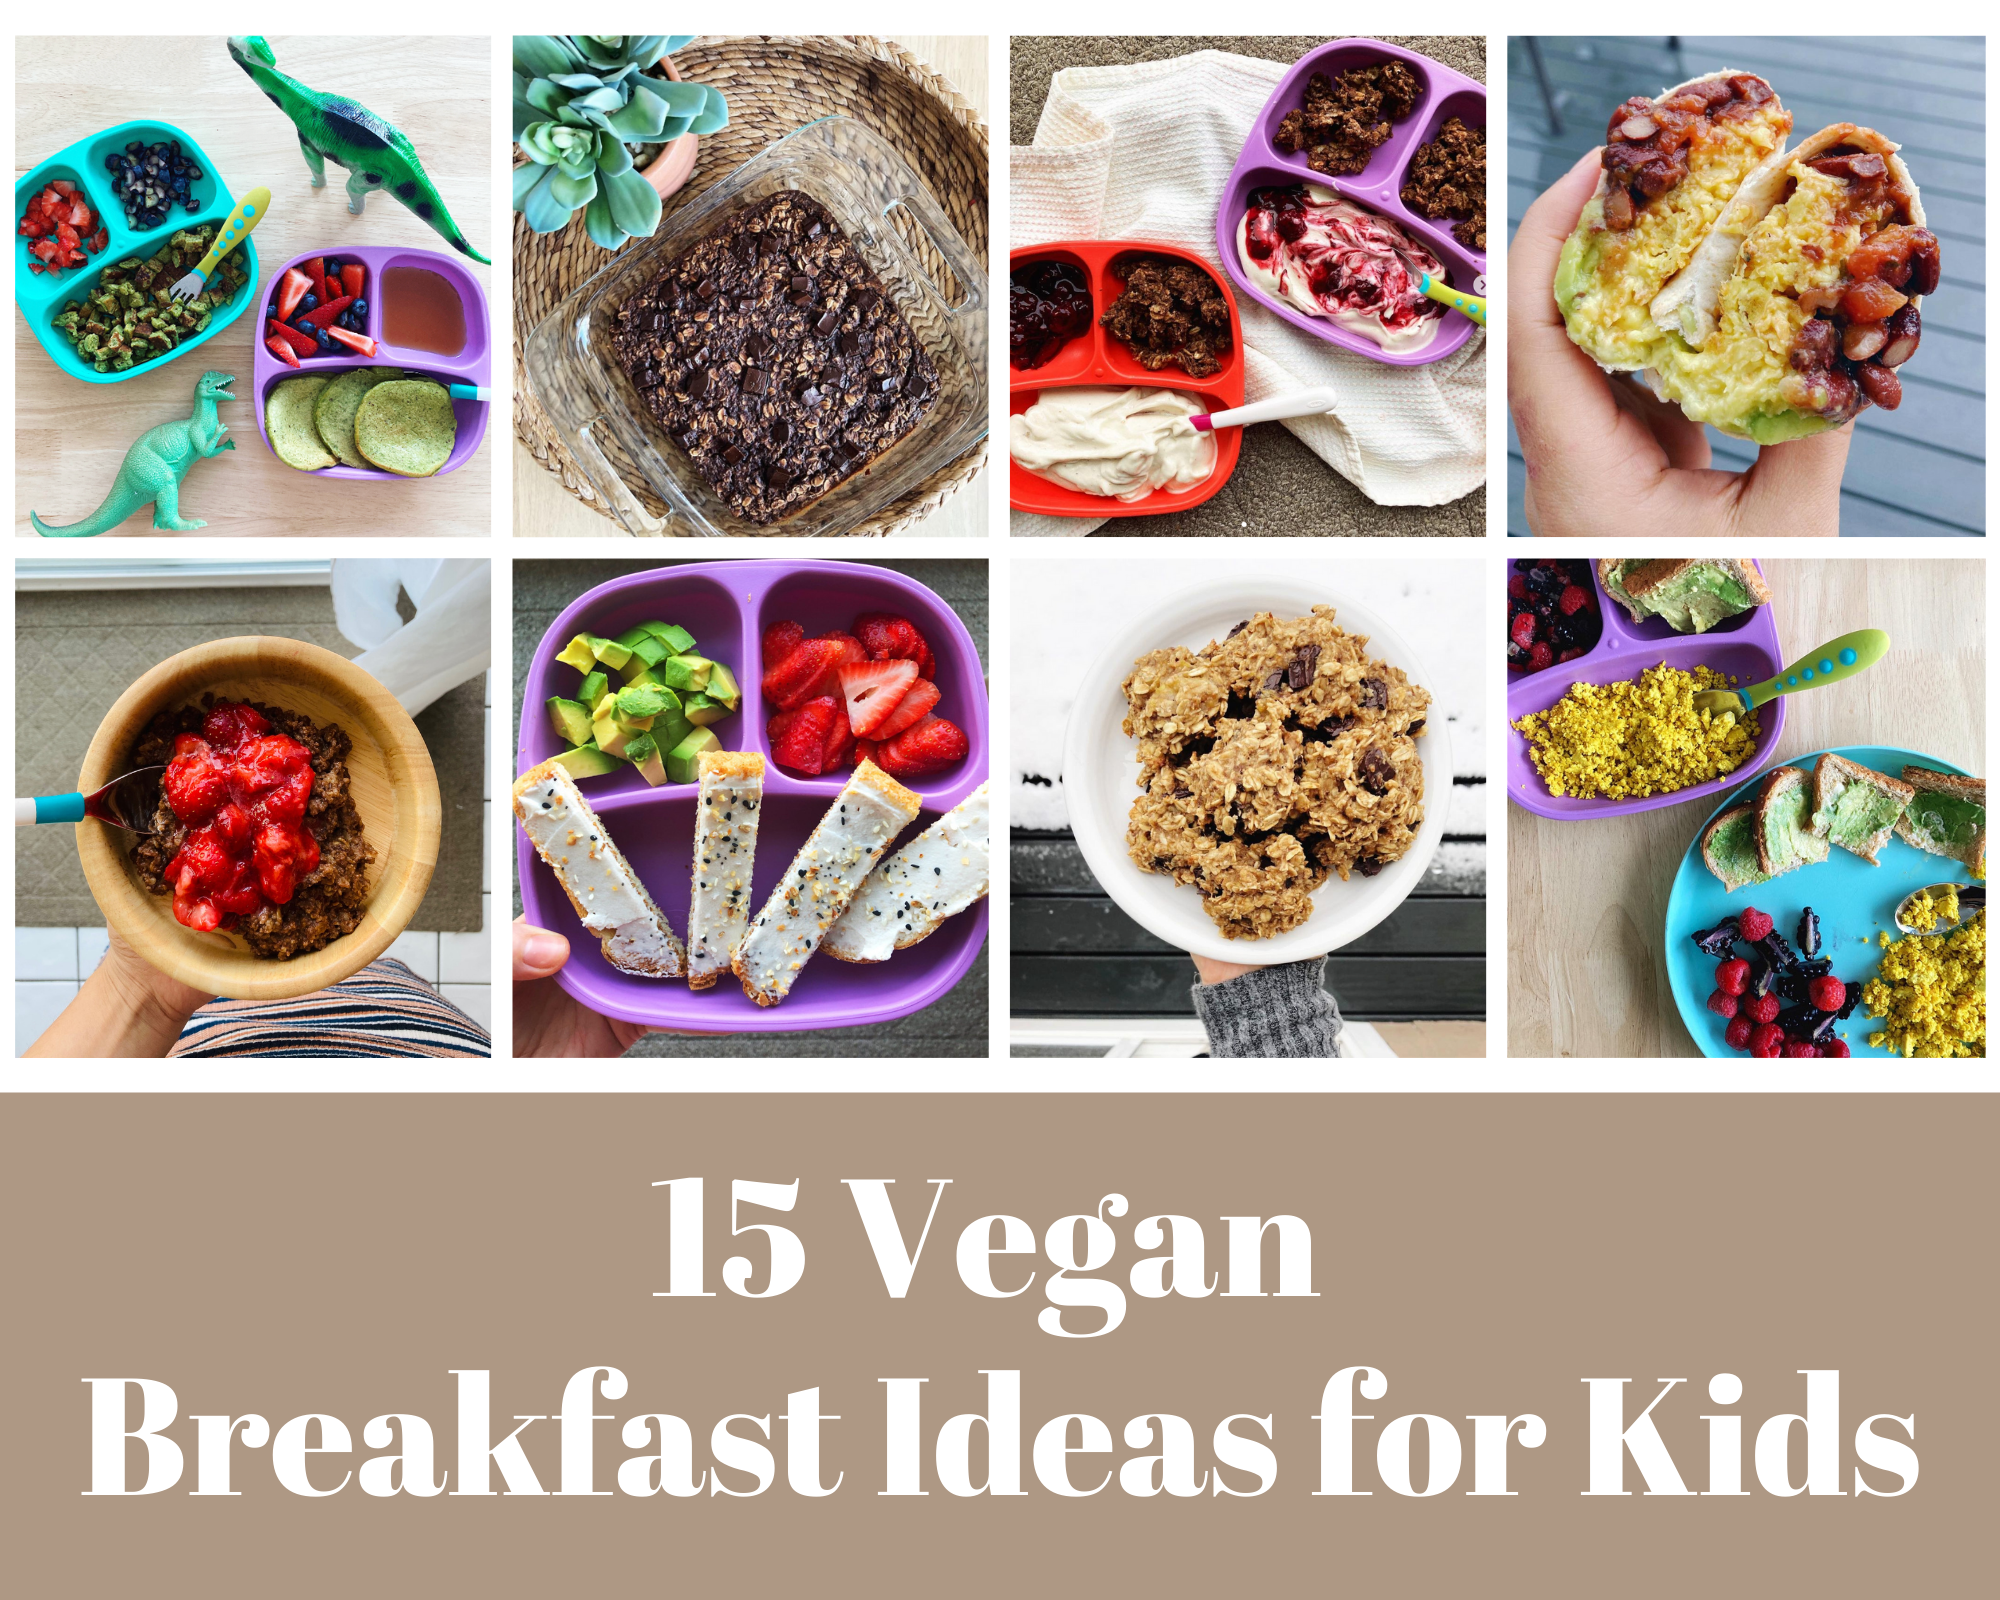 15 Vegan Breakfast Ideas for Kids